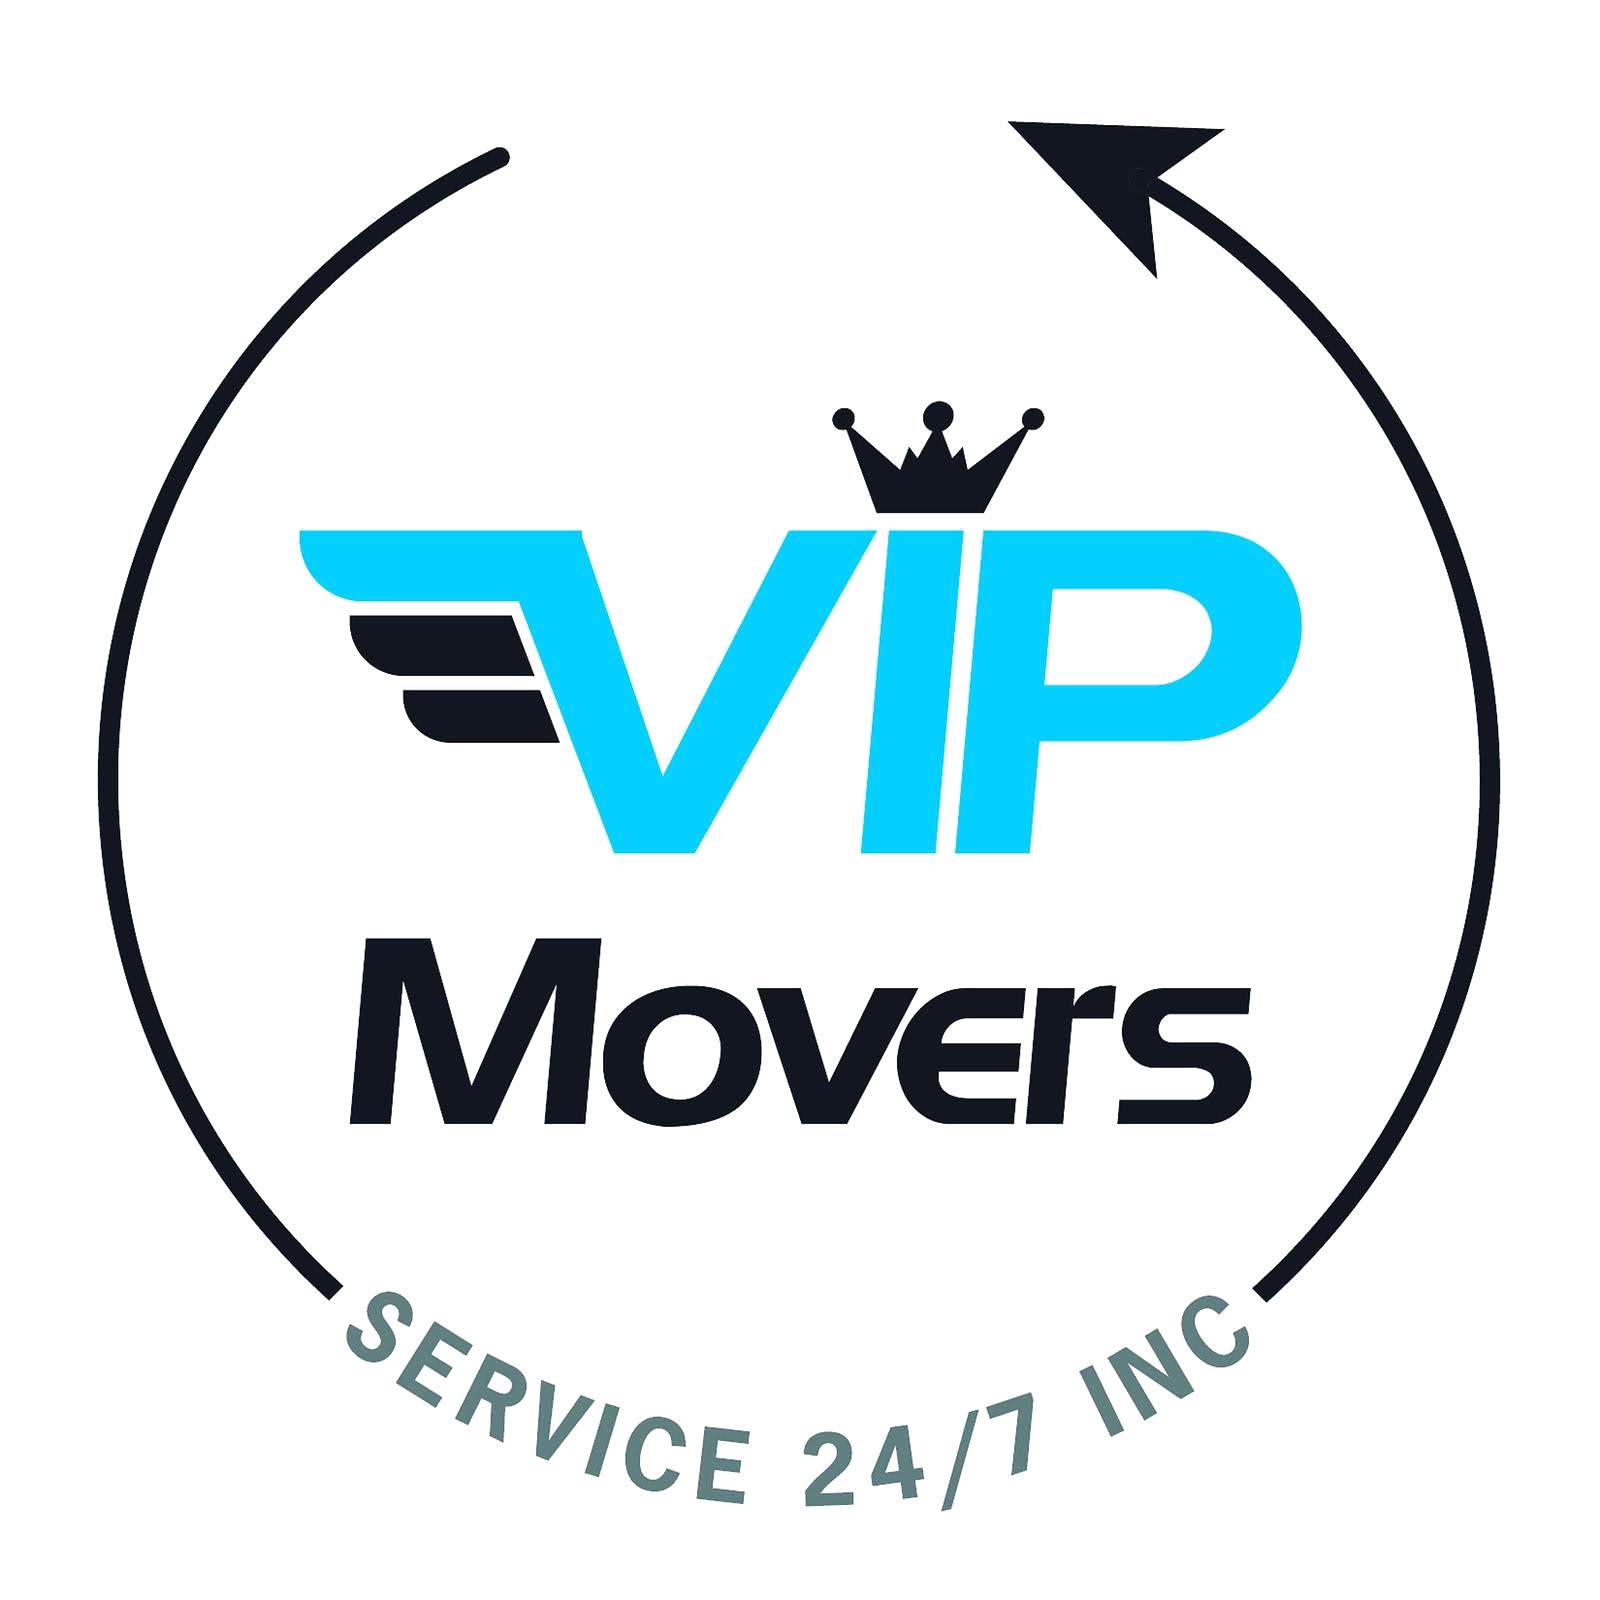 Vip movers Service 24/7 Inc